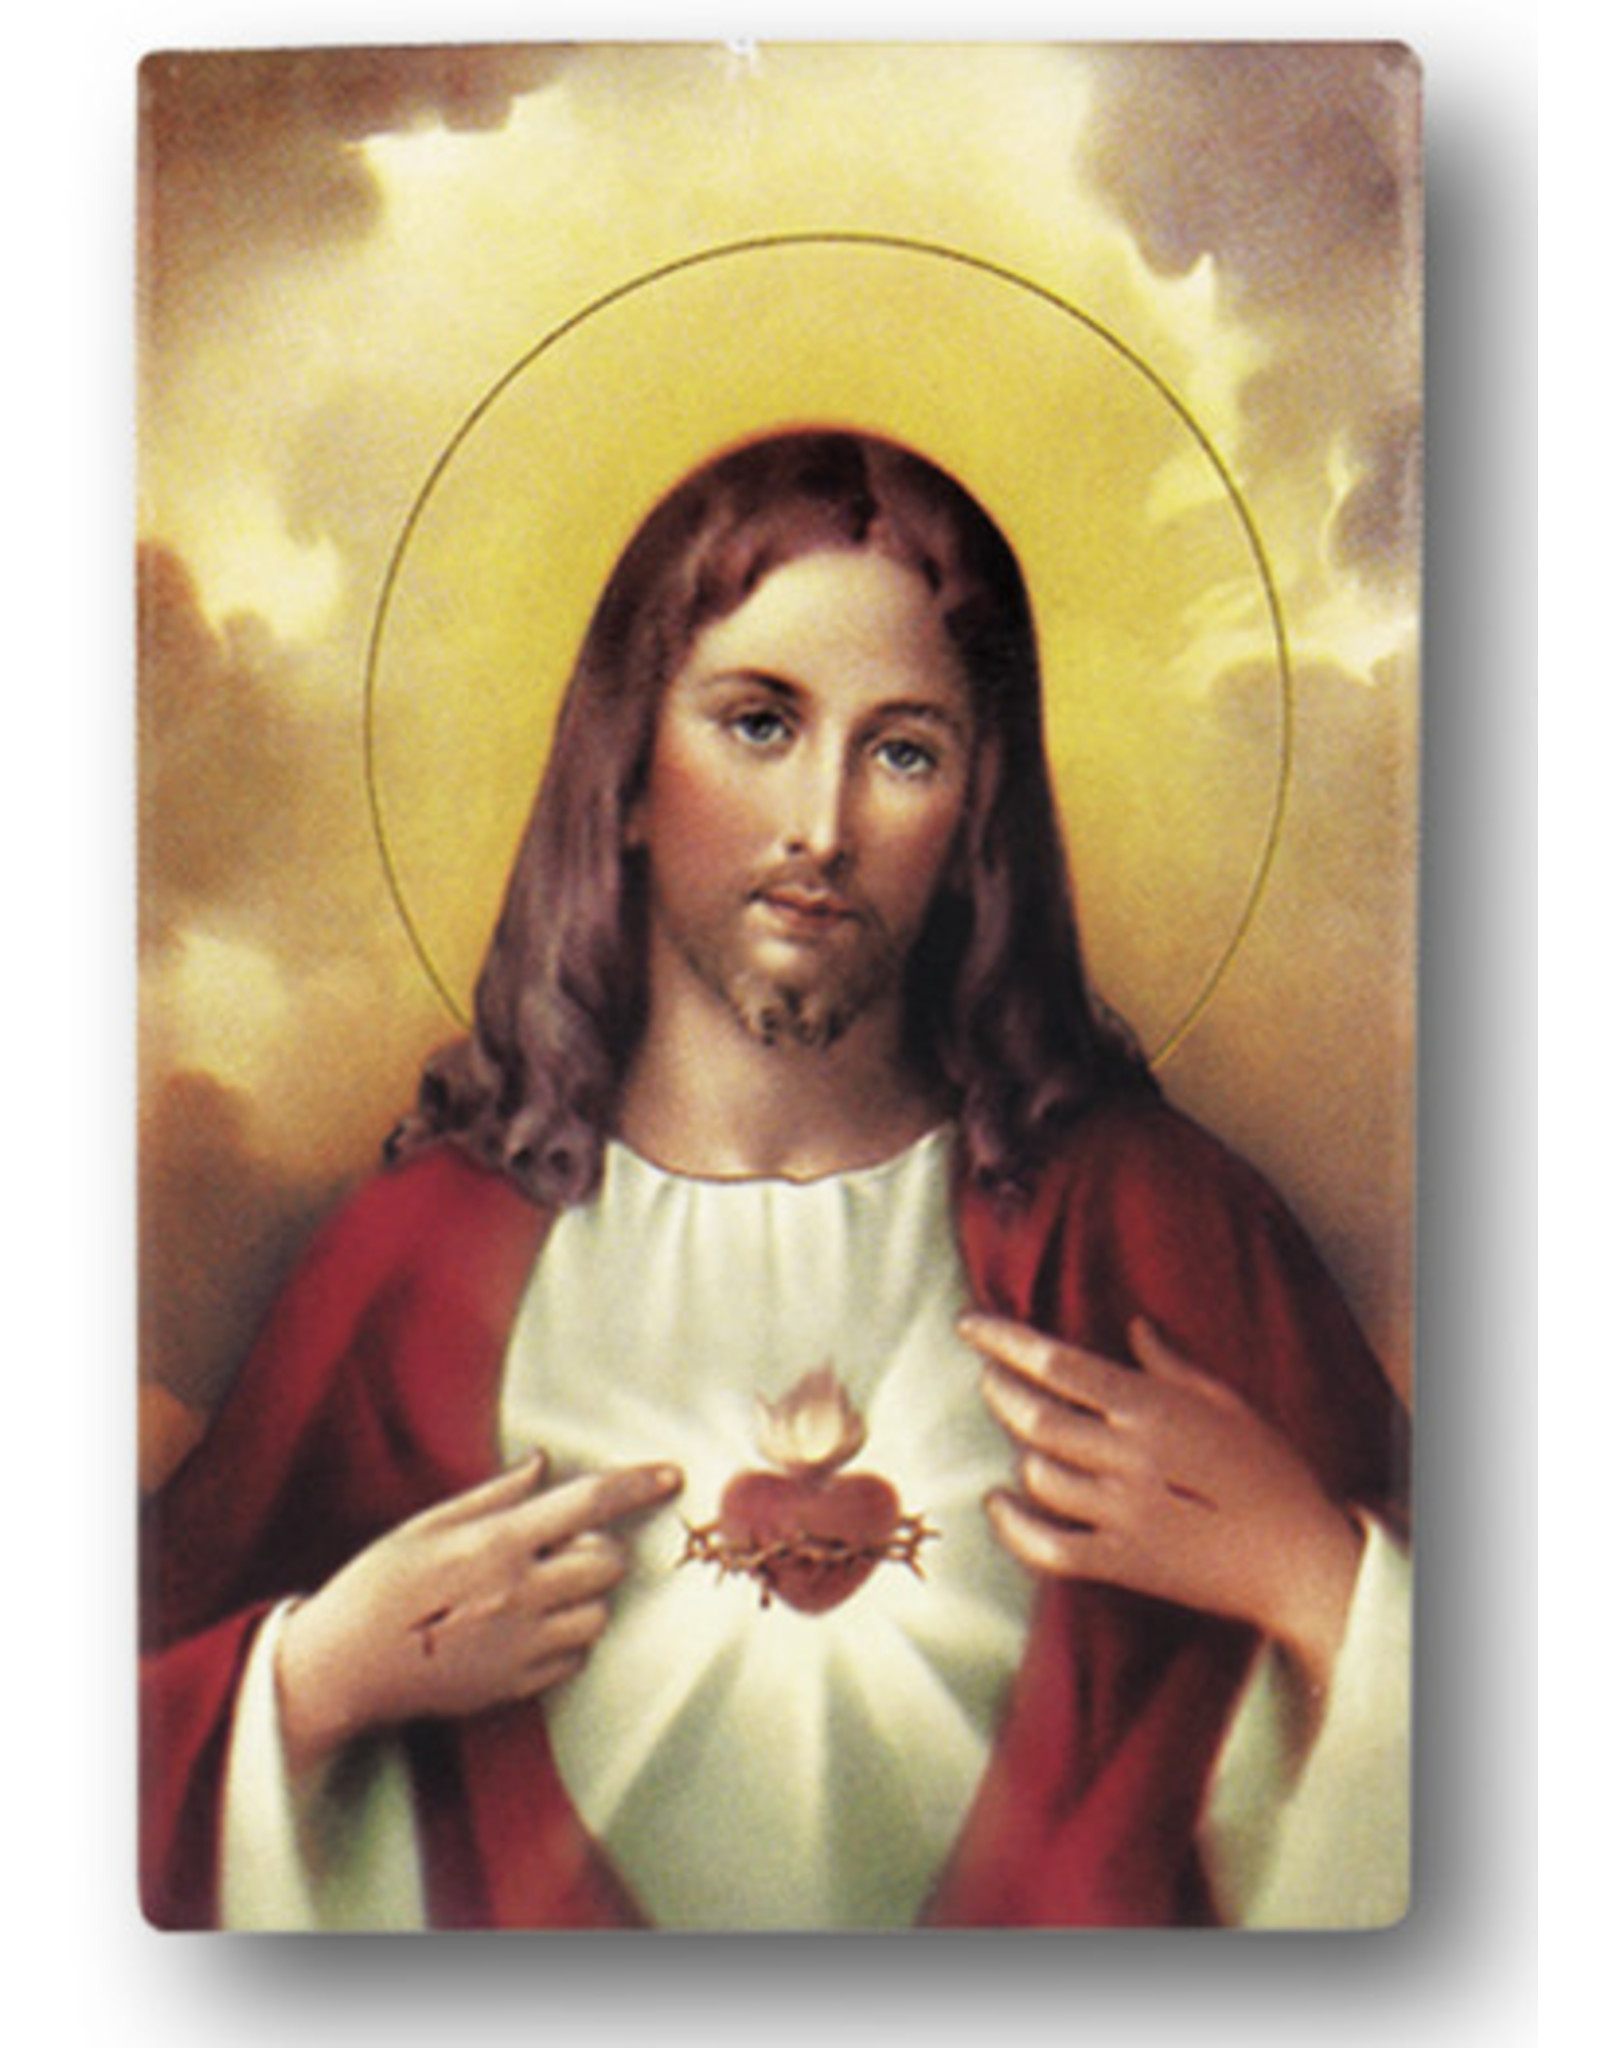 Hirten Sacred Heart of Jesus Magnet, 2”x3”